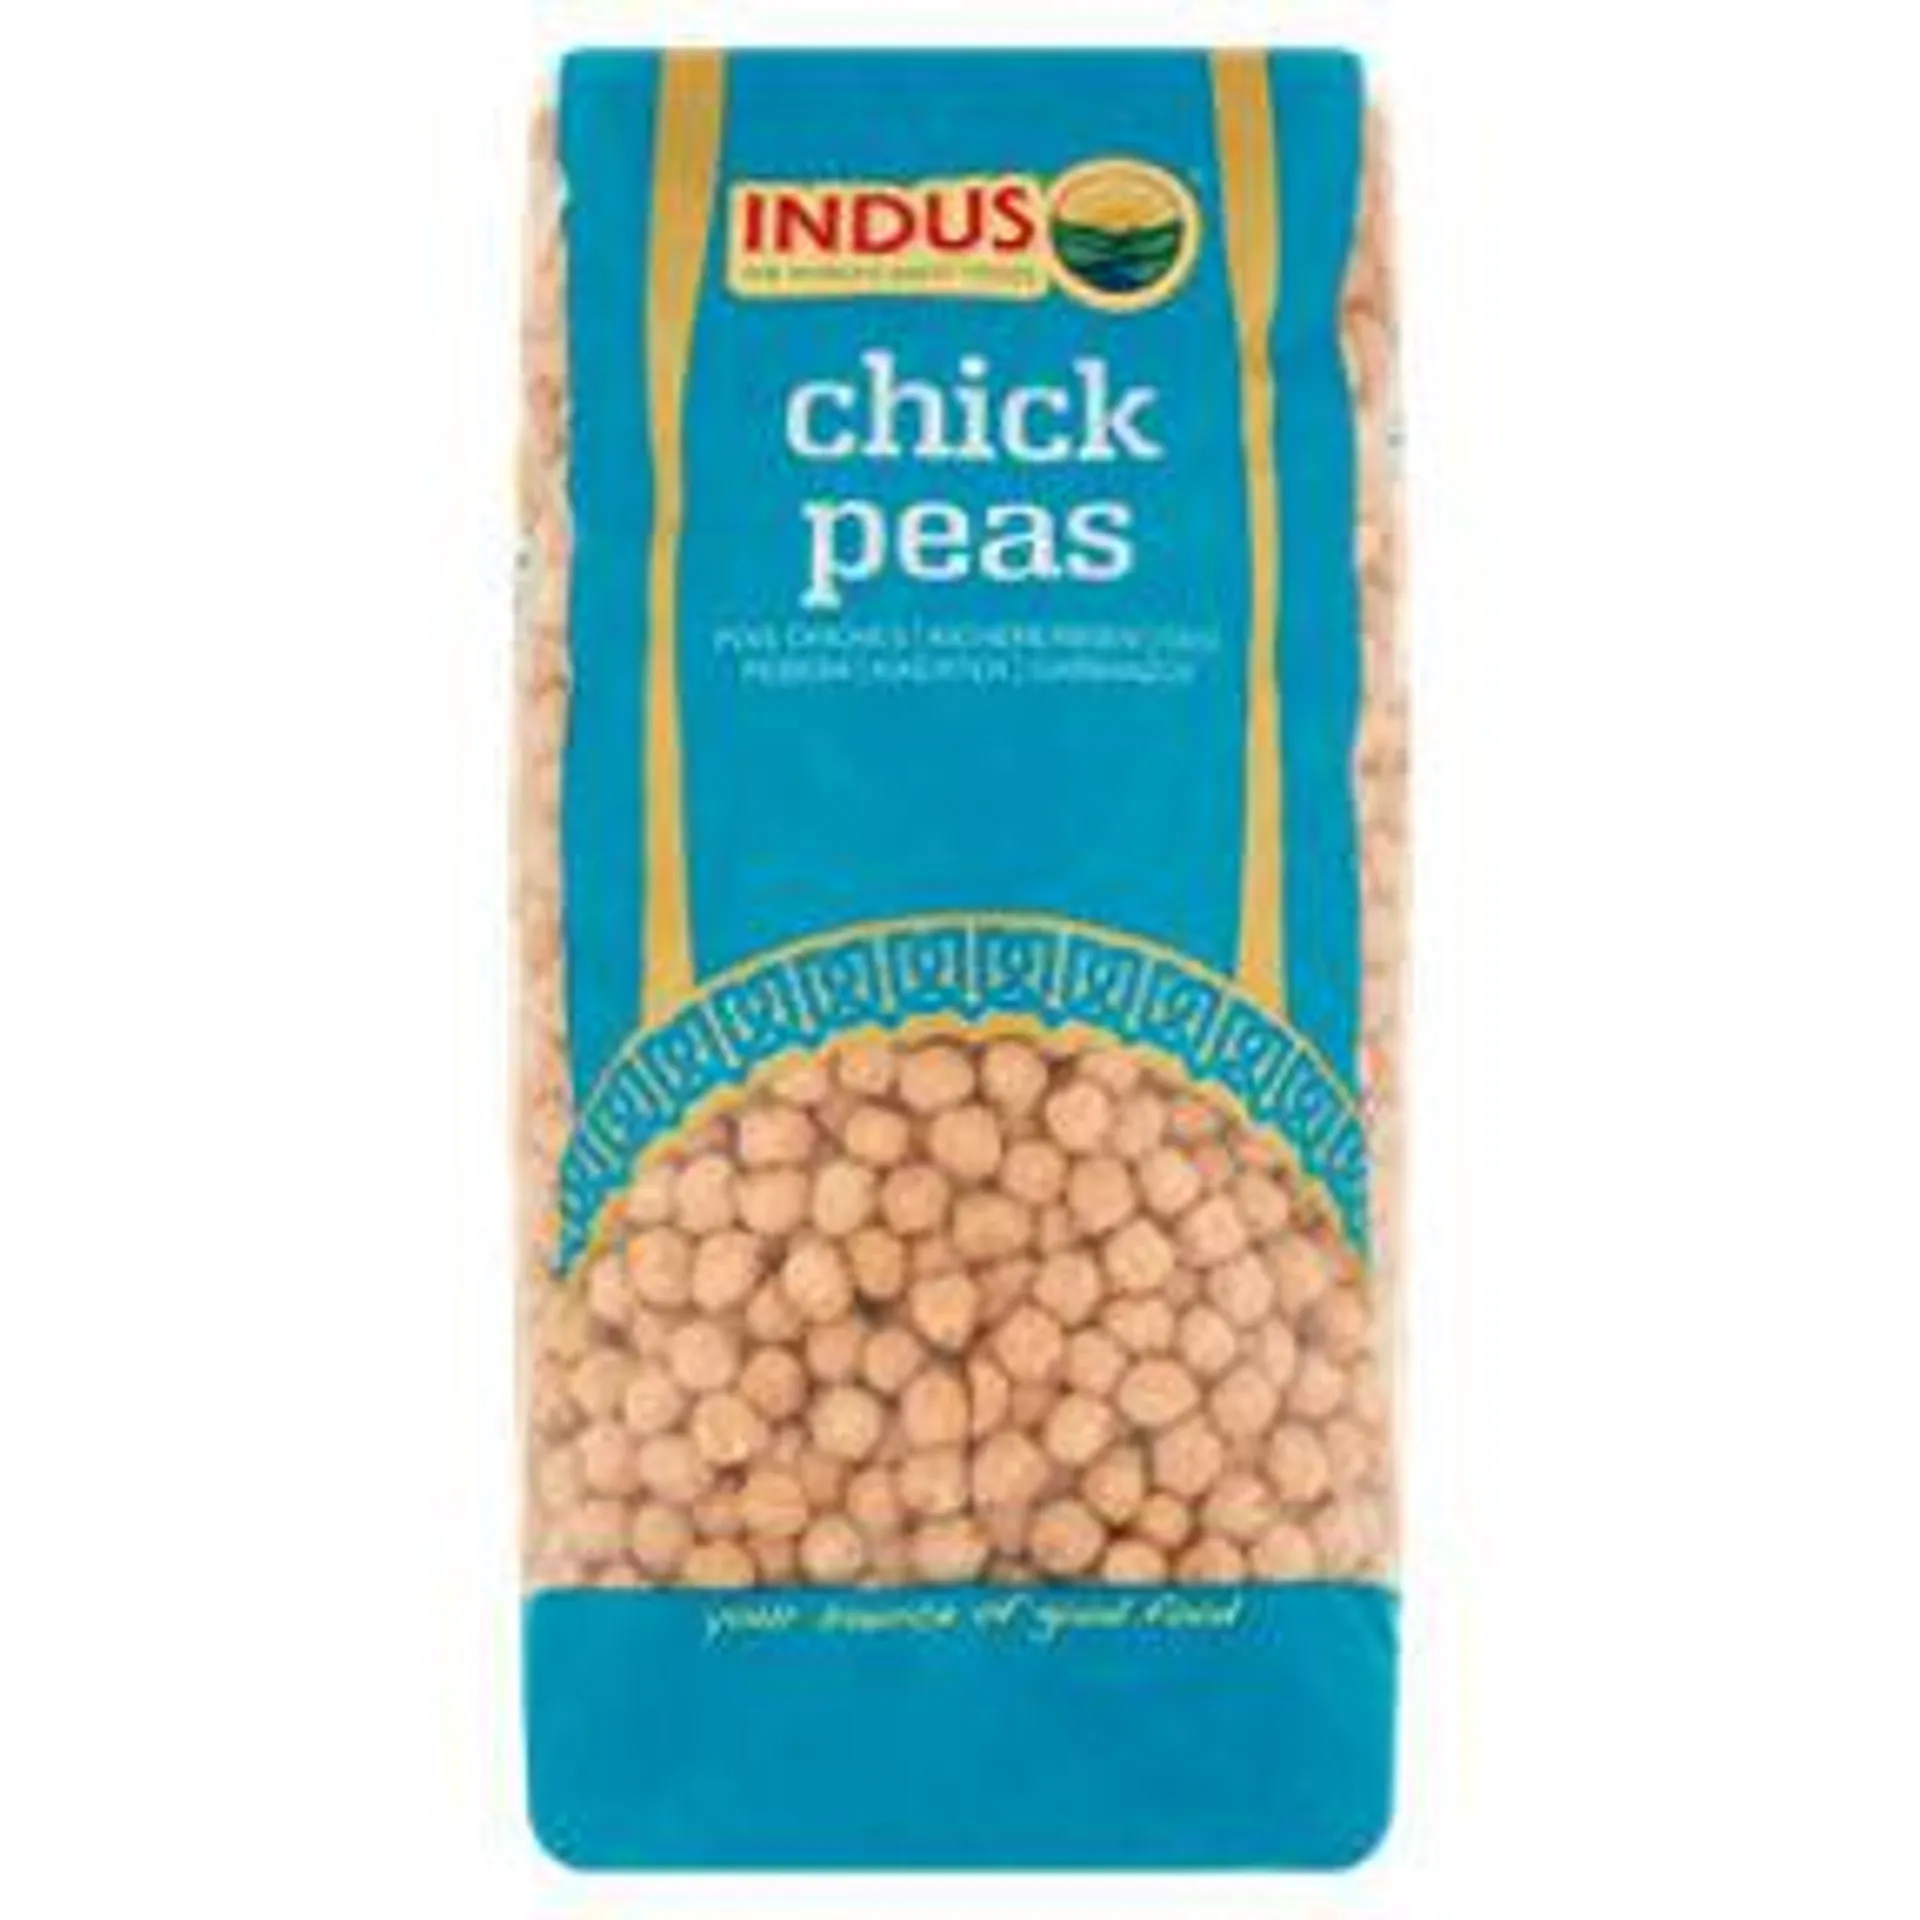 Indus Chick Peas